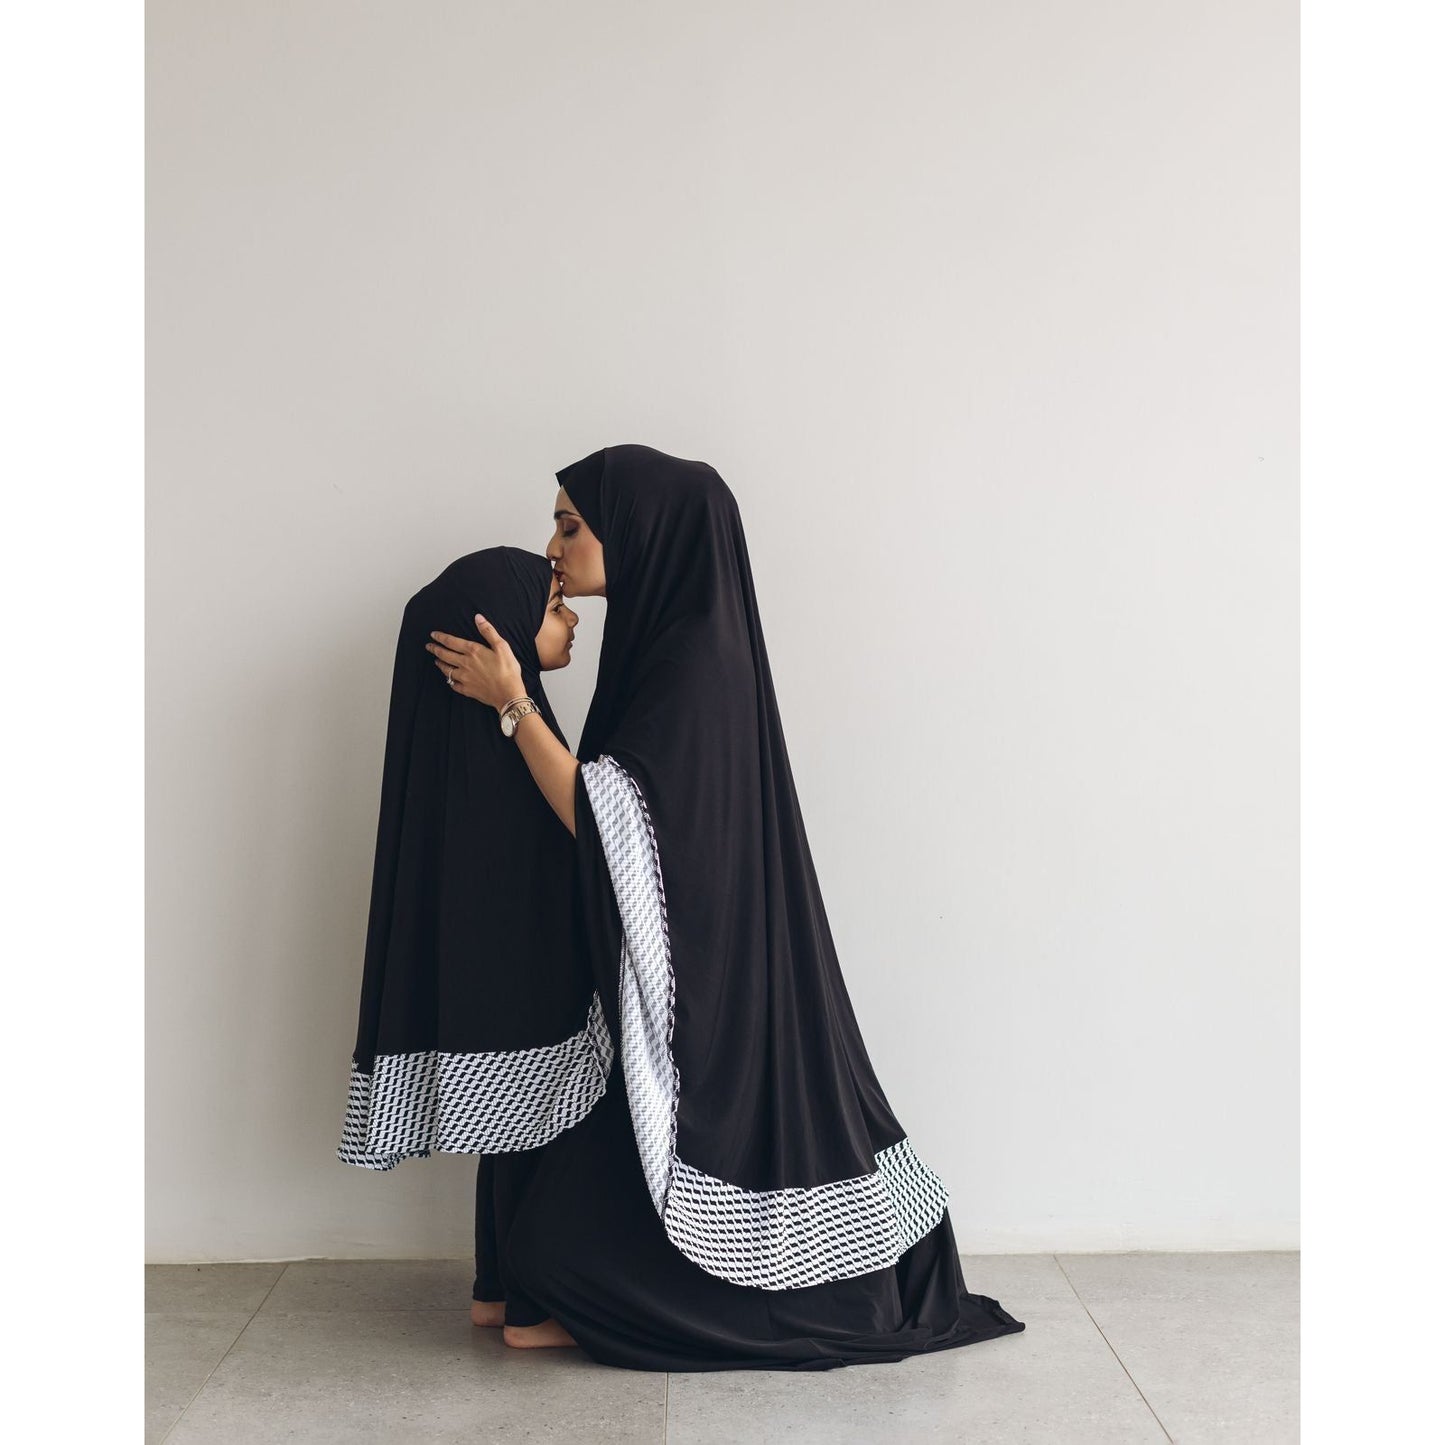 Pocket Burqa - Knee Length - Full Black With Keffiyeh  (Plisse Edition)